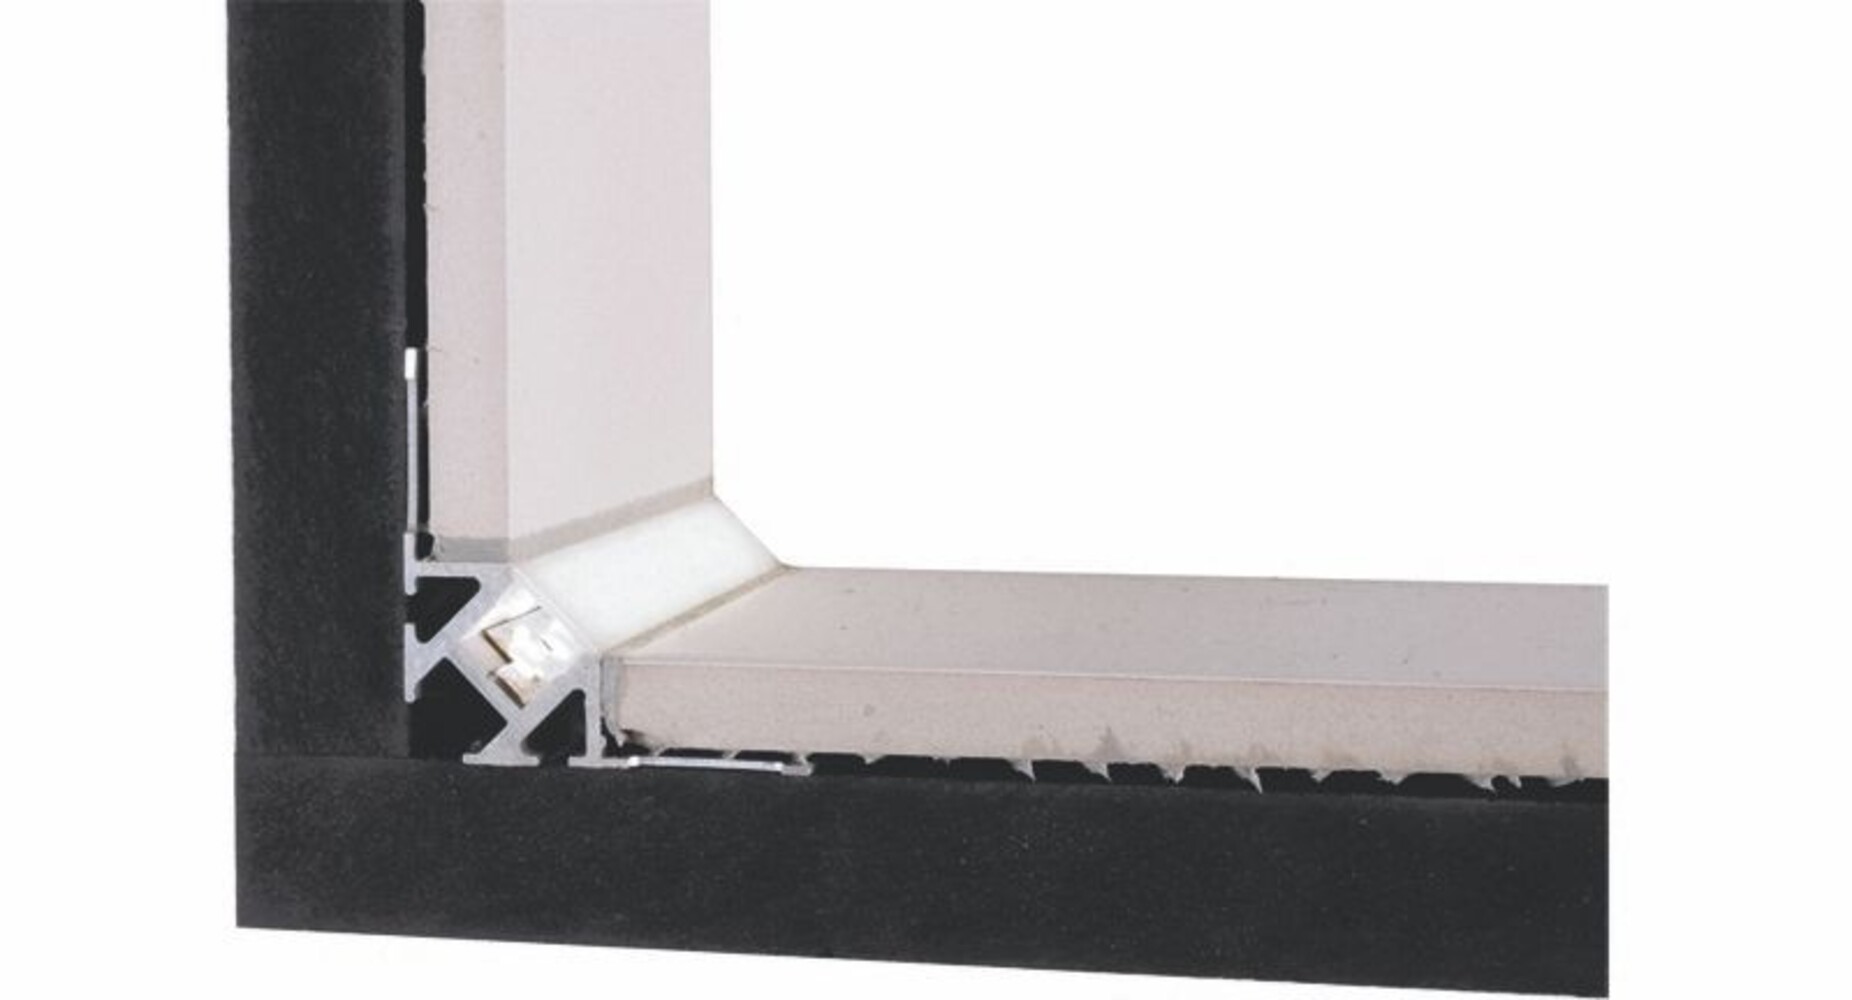 Duable silber matte LED Profil der Marke Deko-Light zur Beleuchtung